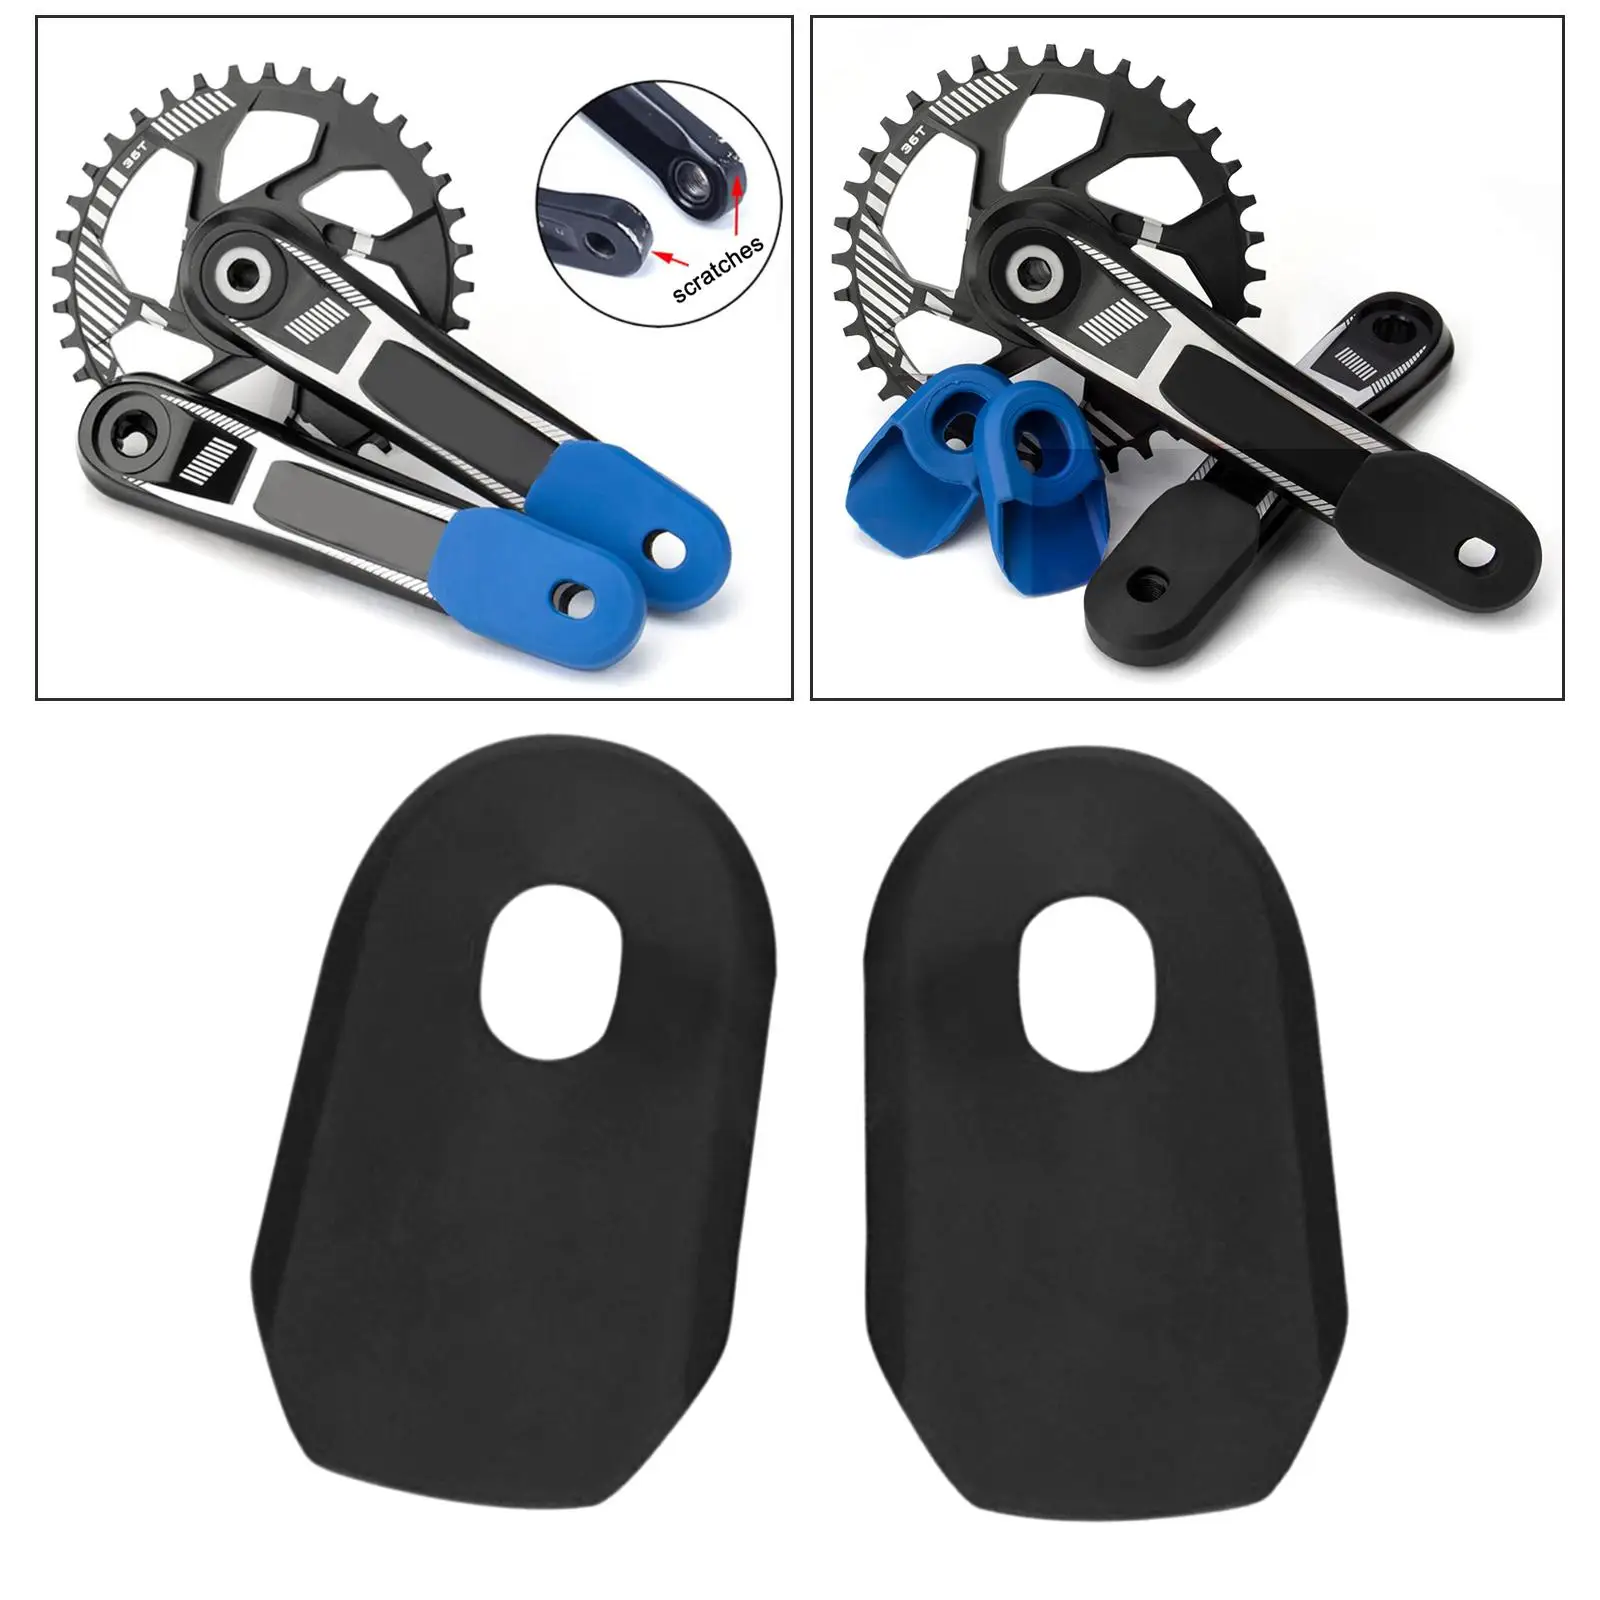 2x Road Bike Crank Arm Protector Crankset Cycling Accessories Bicycle Crank Boots Cover